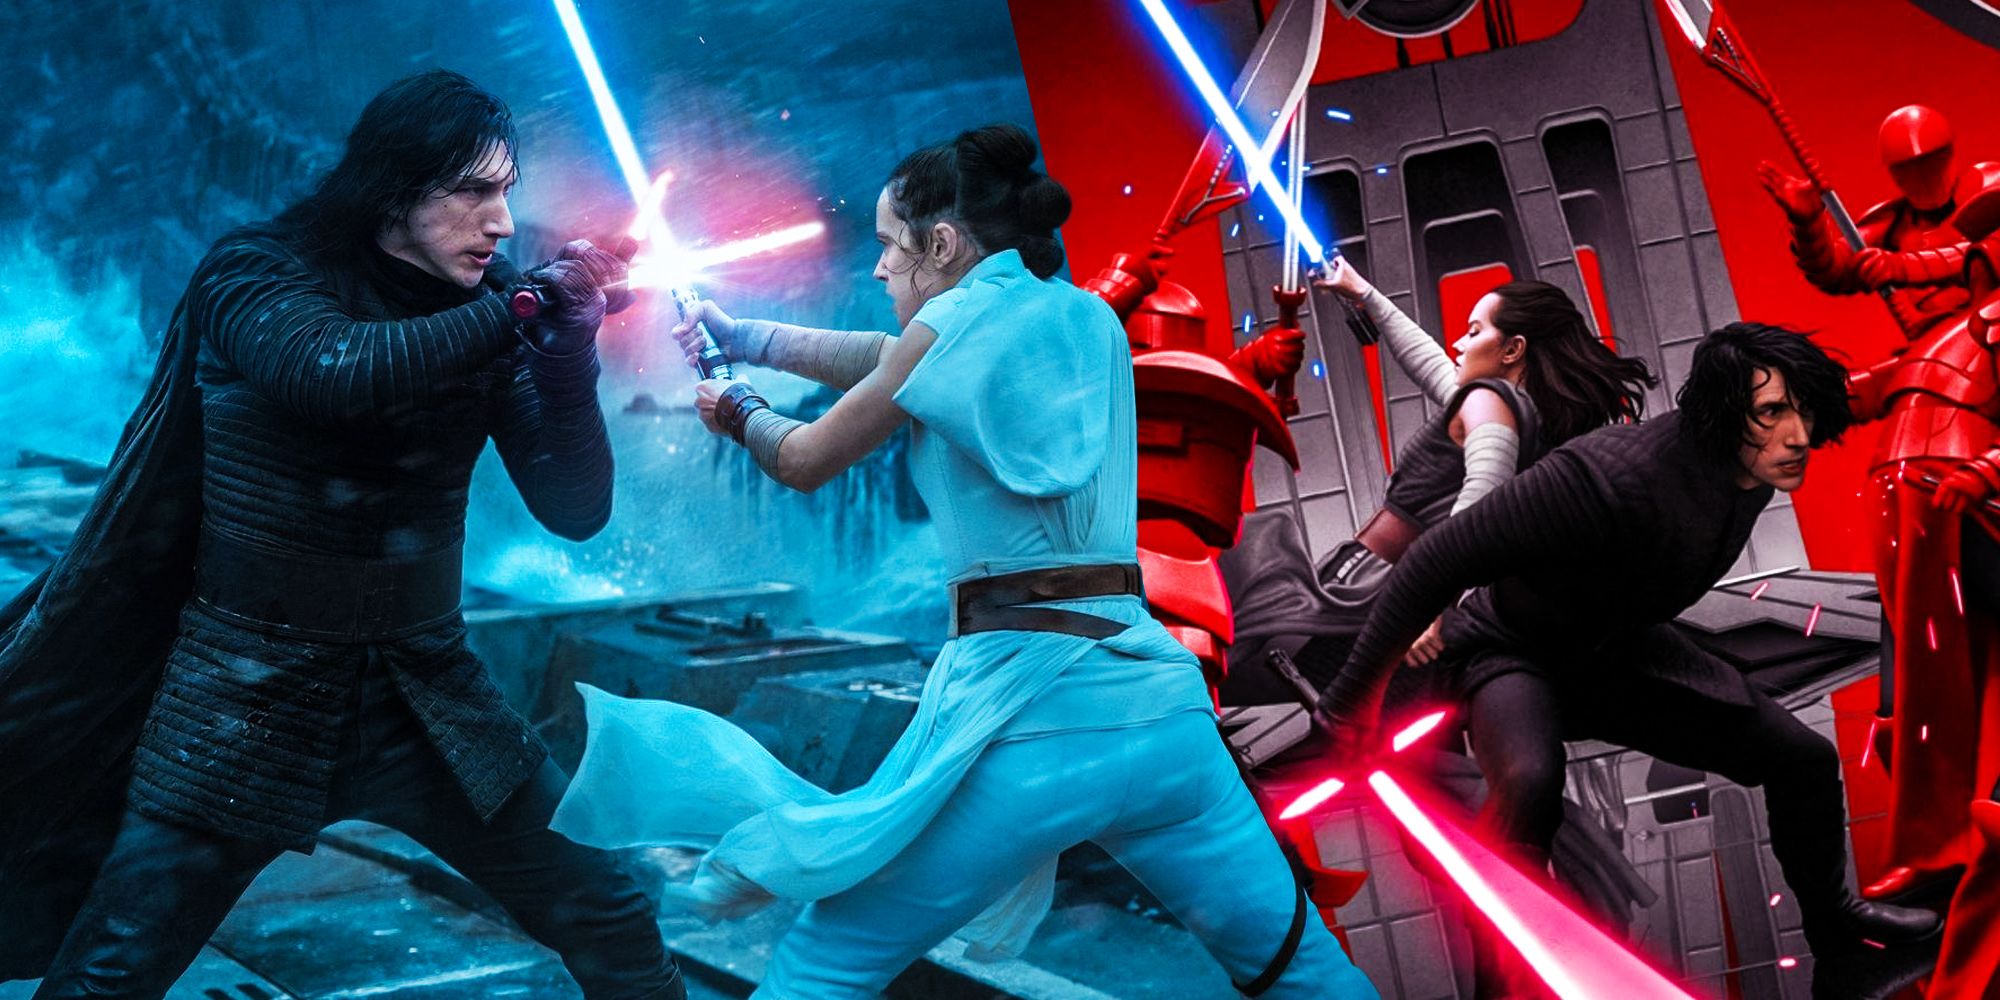 Star wars sequels duels blend original prequel trilogies